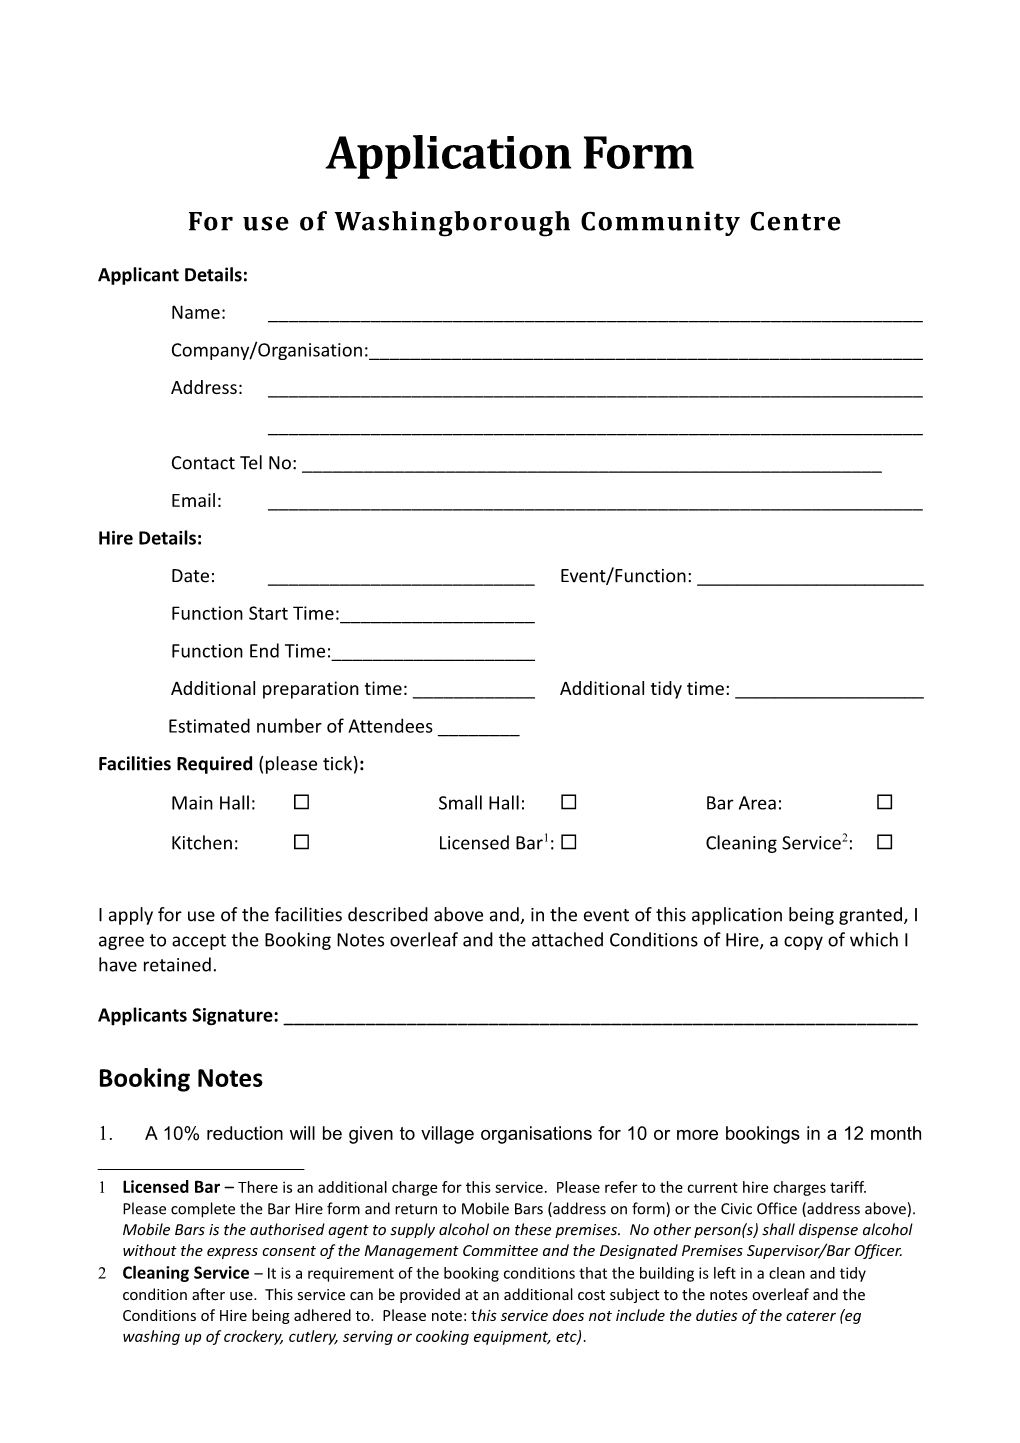 For Use of Washingborough Community Centre